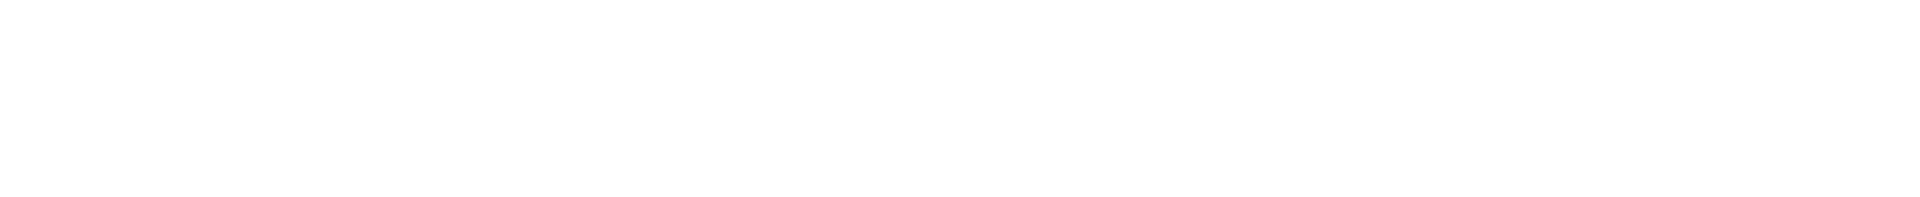 WL Logo